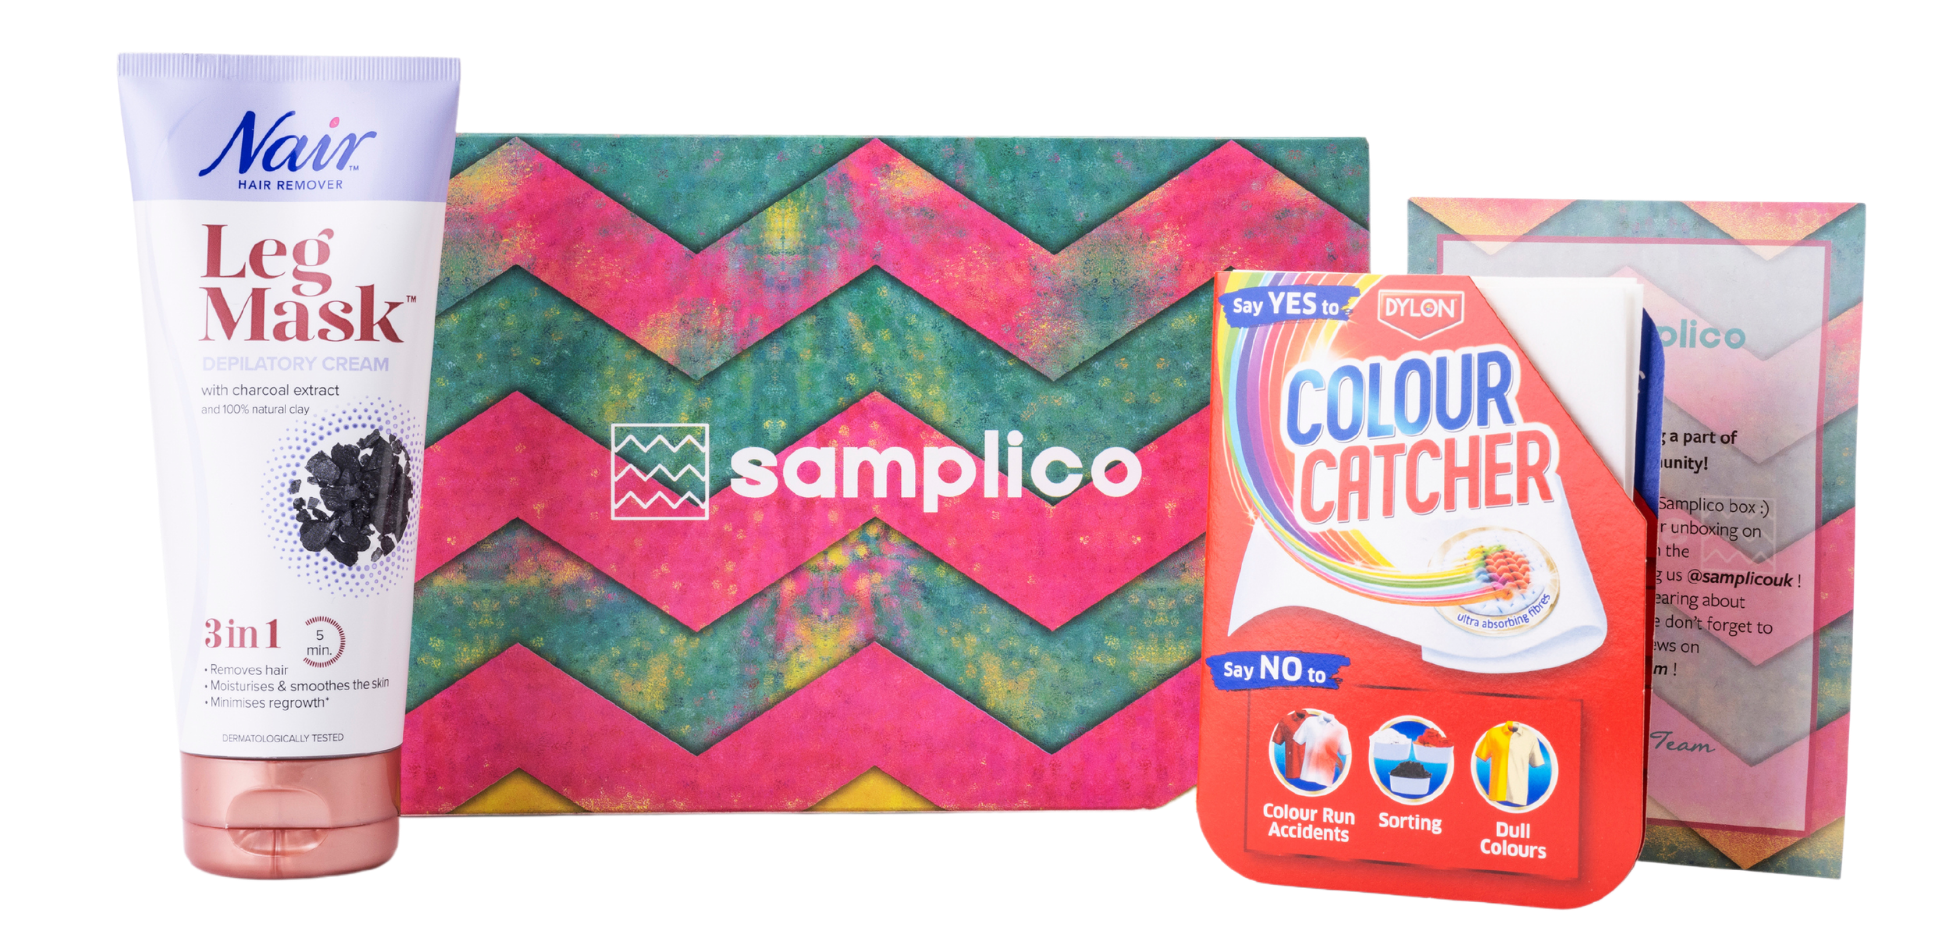 Colour Catcher - Samplico